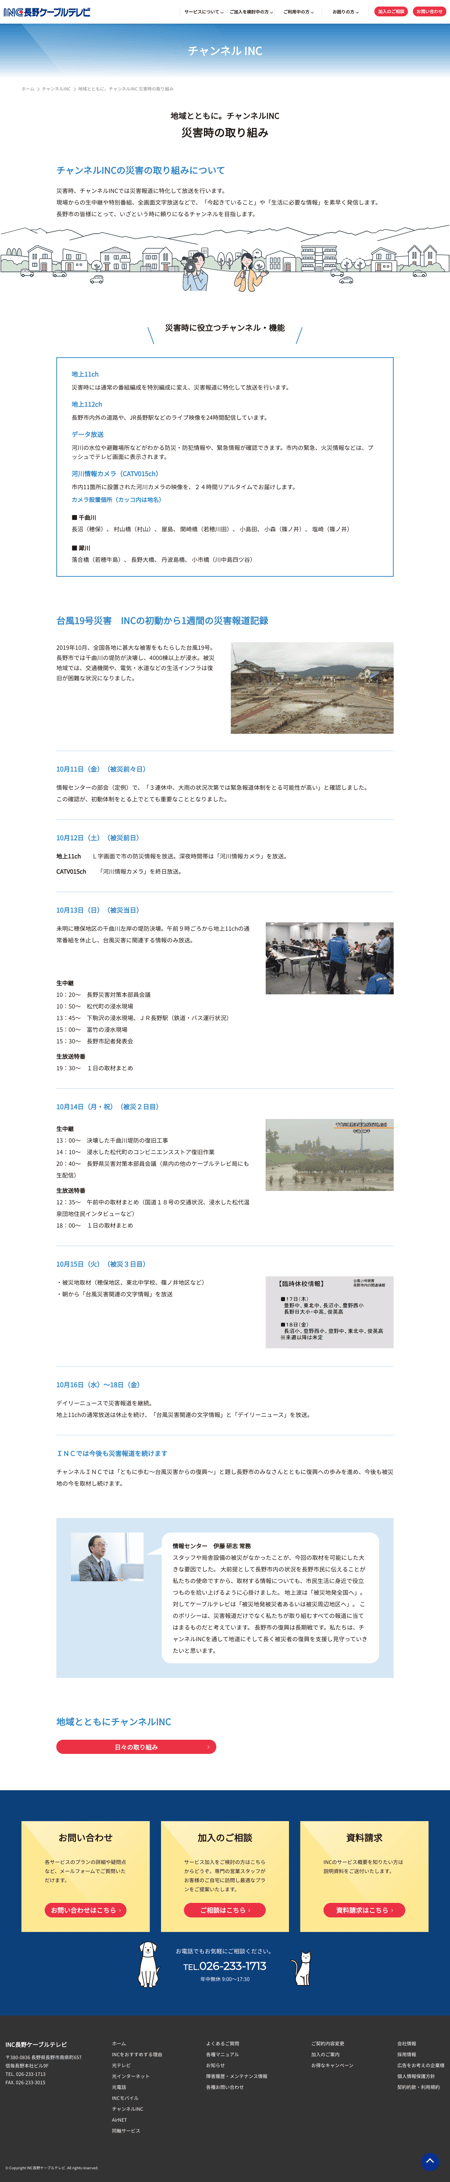 screencapture-nagano-inc-co-jp-inc-disaster-Information-2020-04-02-16_13_24